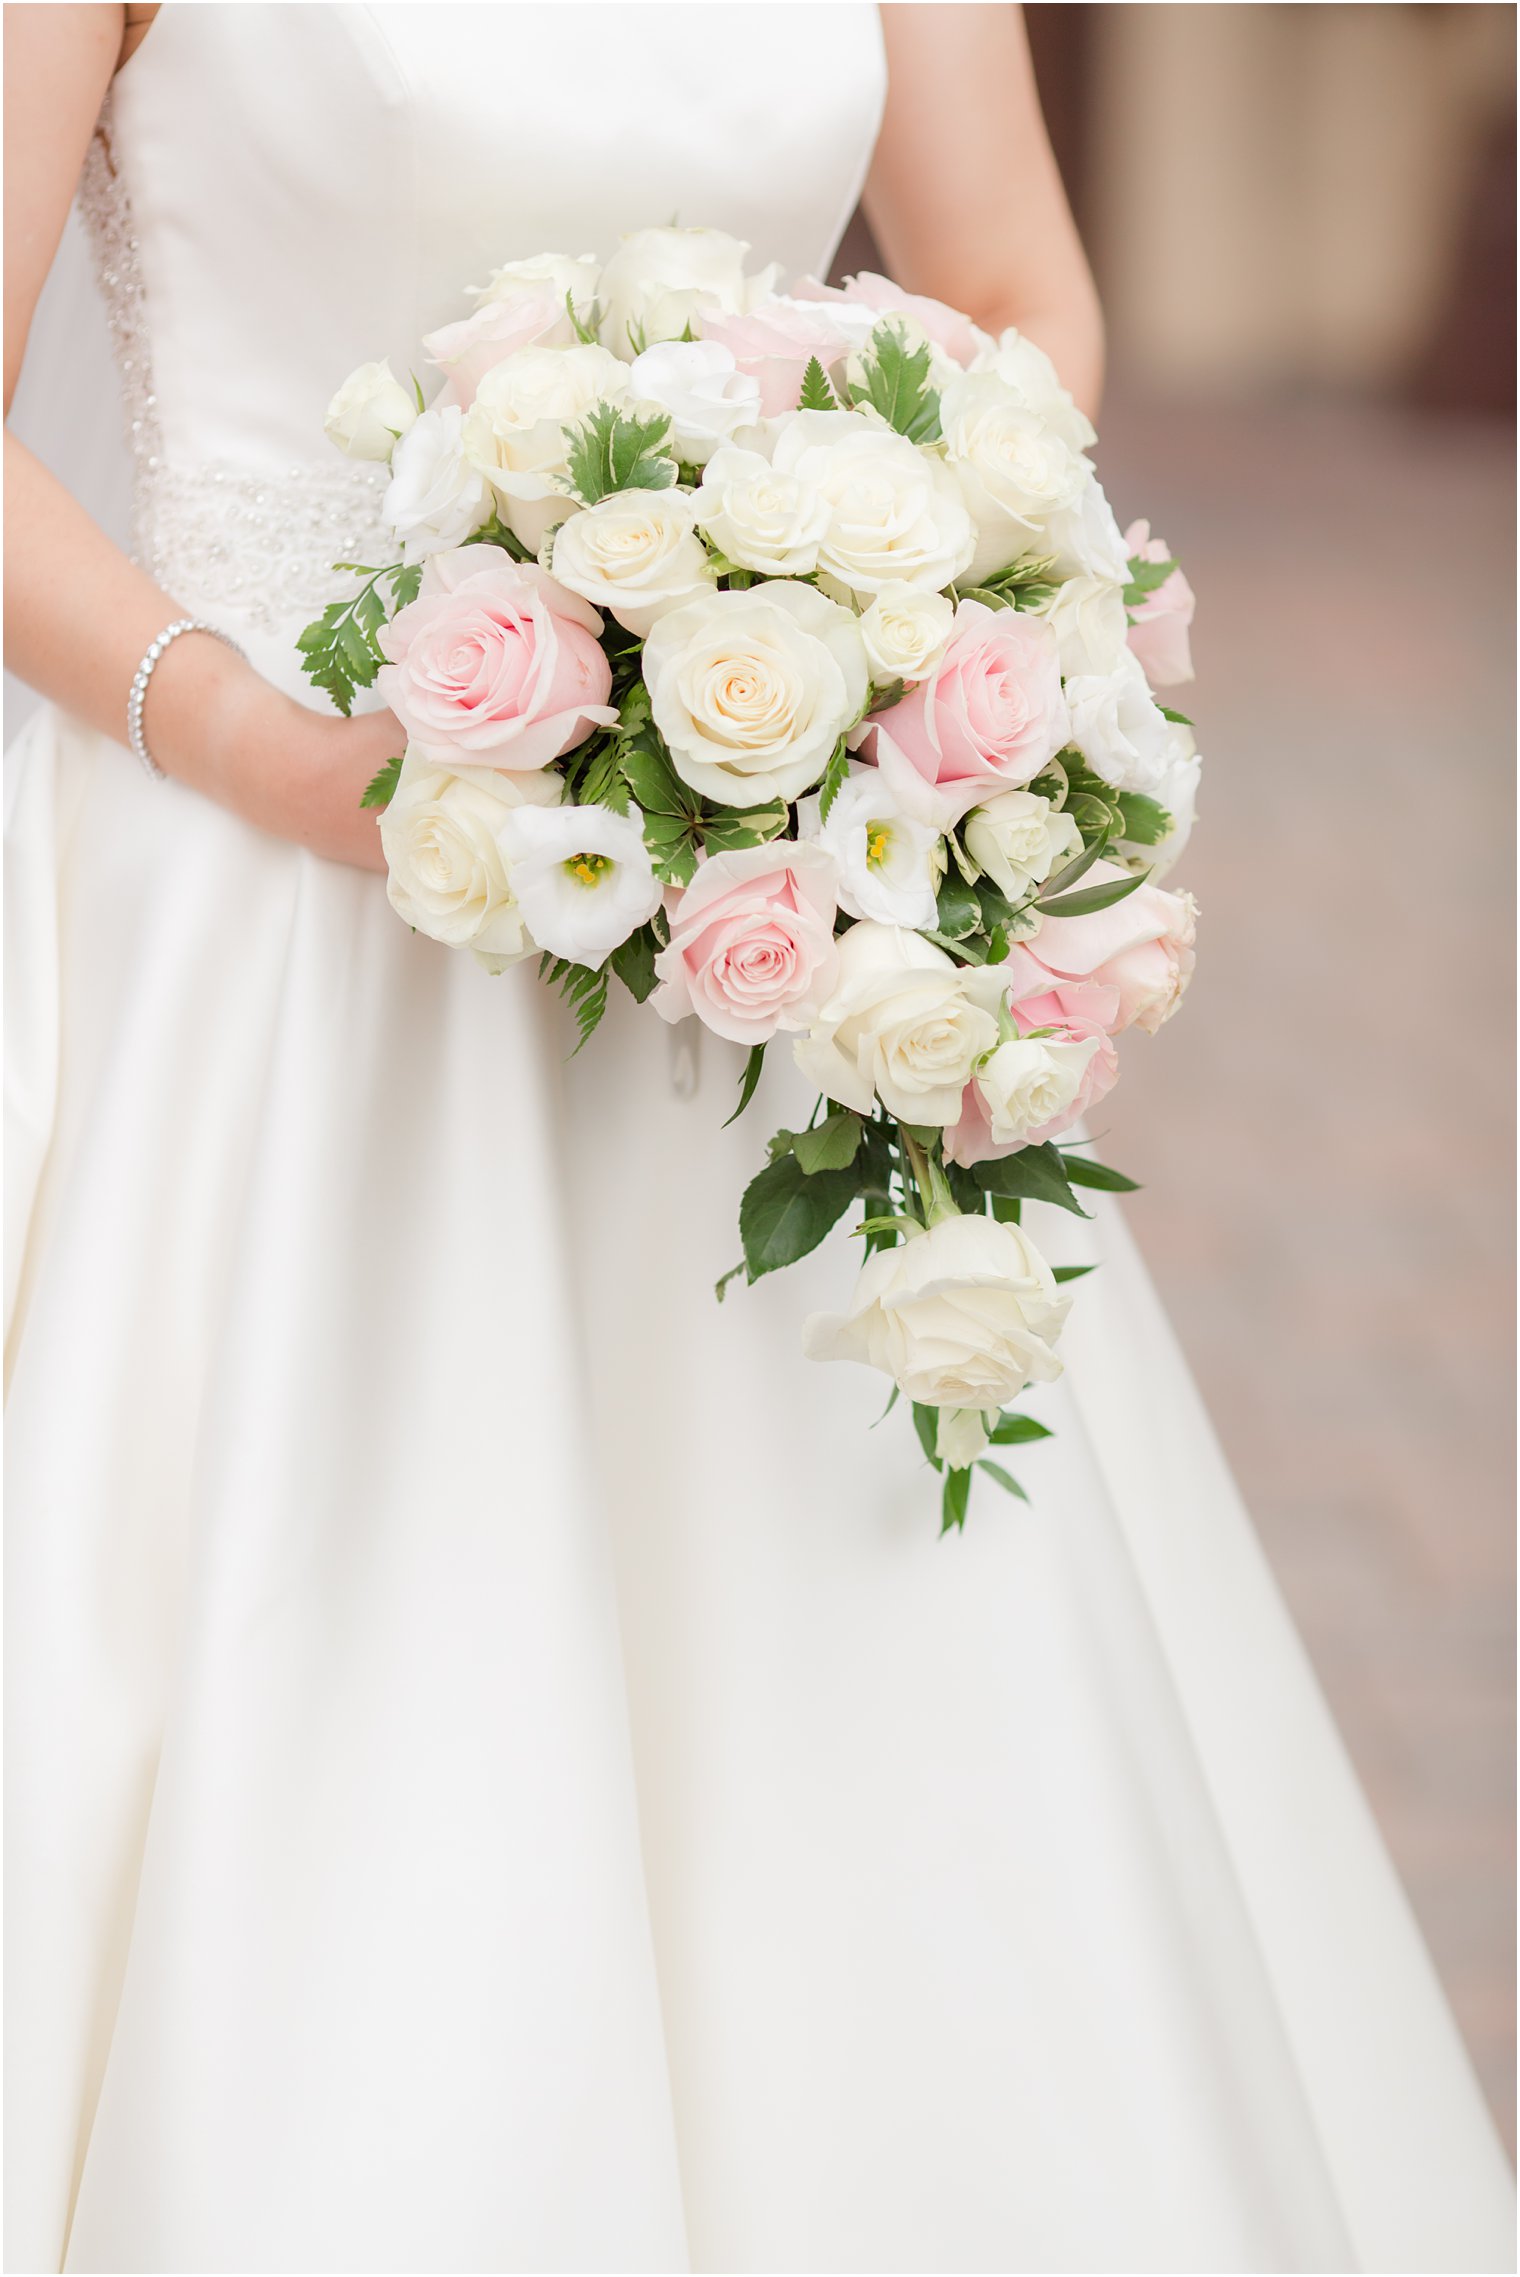 Teardrop bouquet by Blooming Brides Florist